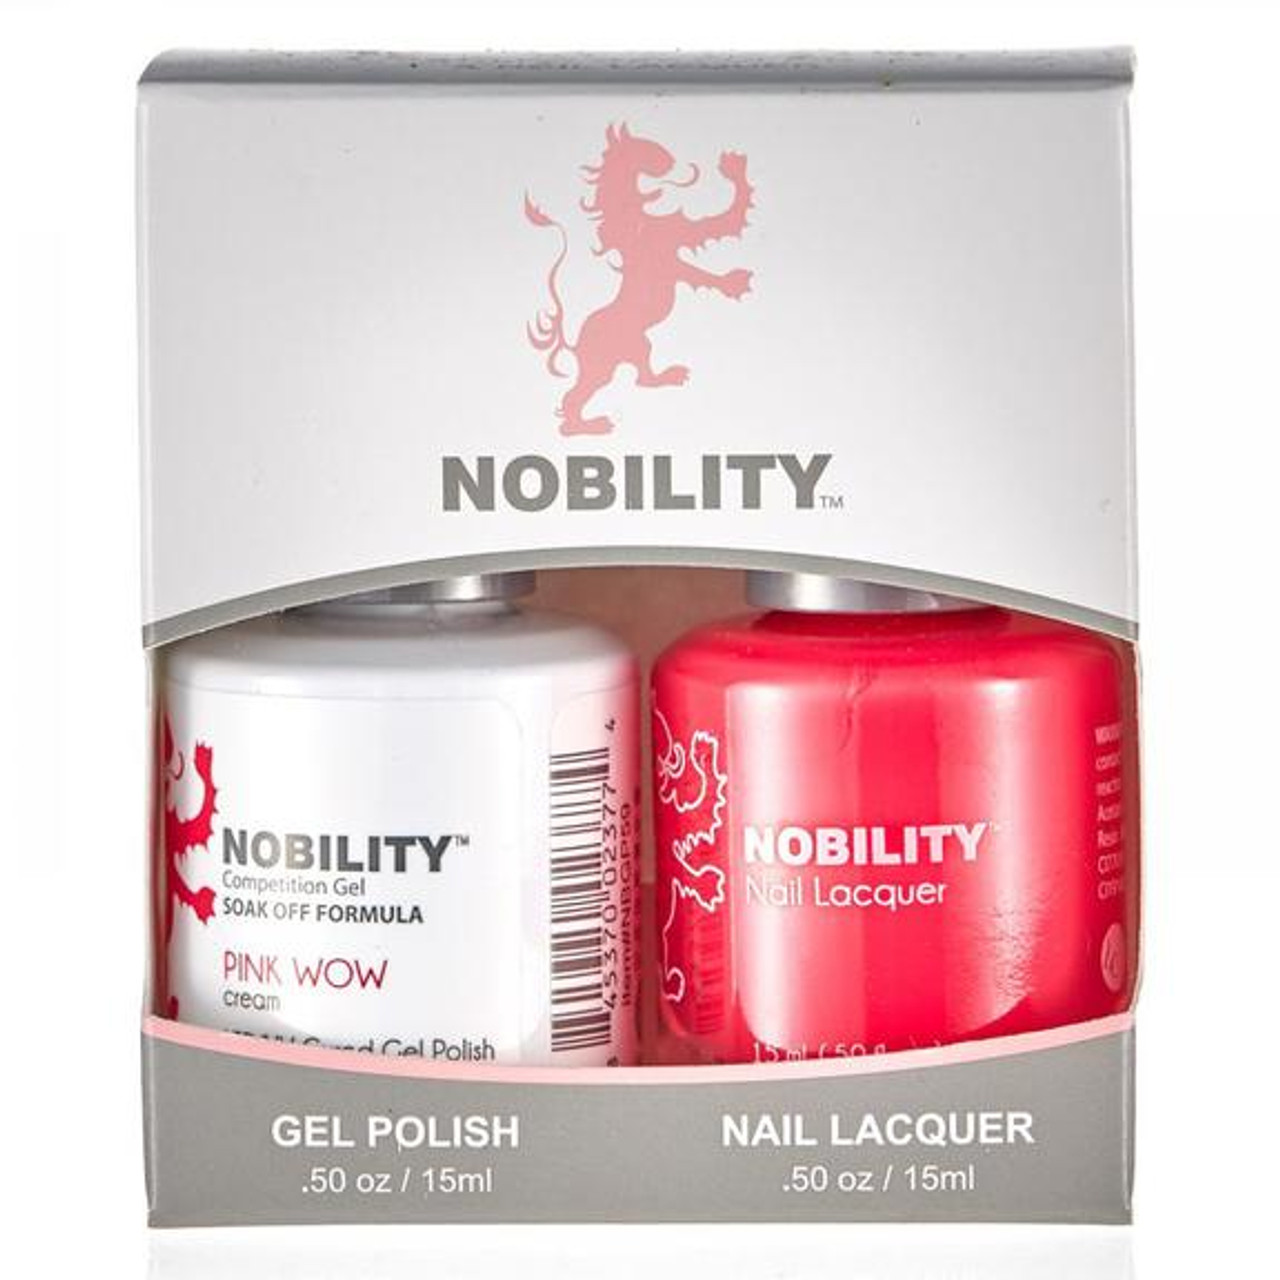 LeChat Nobility Gel Polish & Nail Lacquer Duo Set Pink Wow - .5 oz / 15 ml